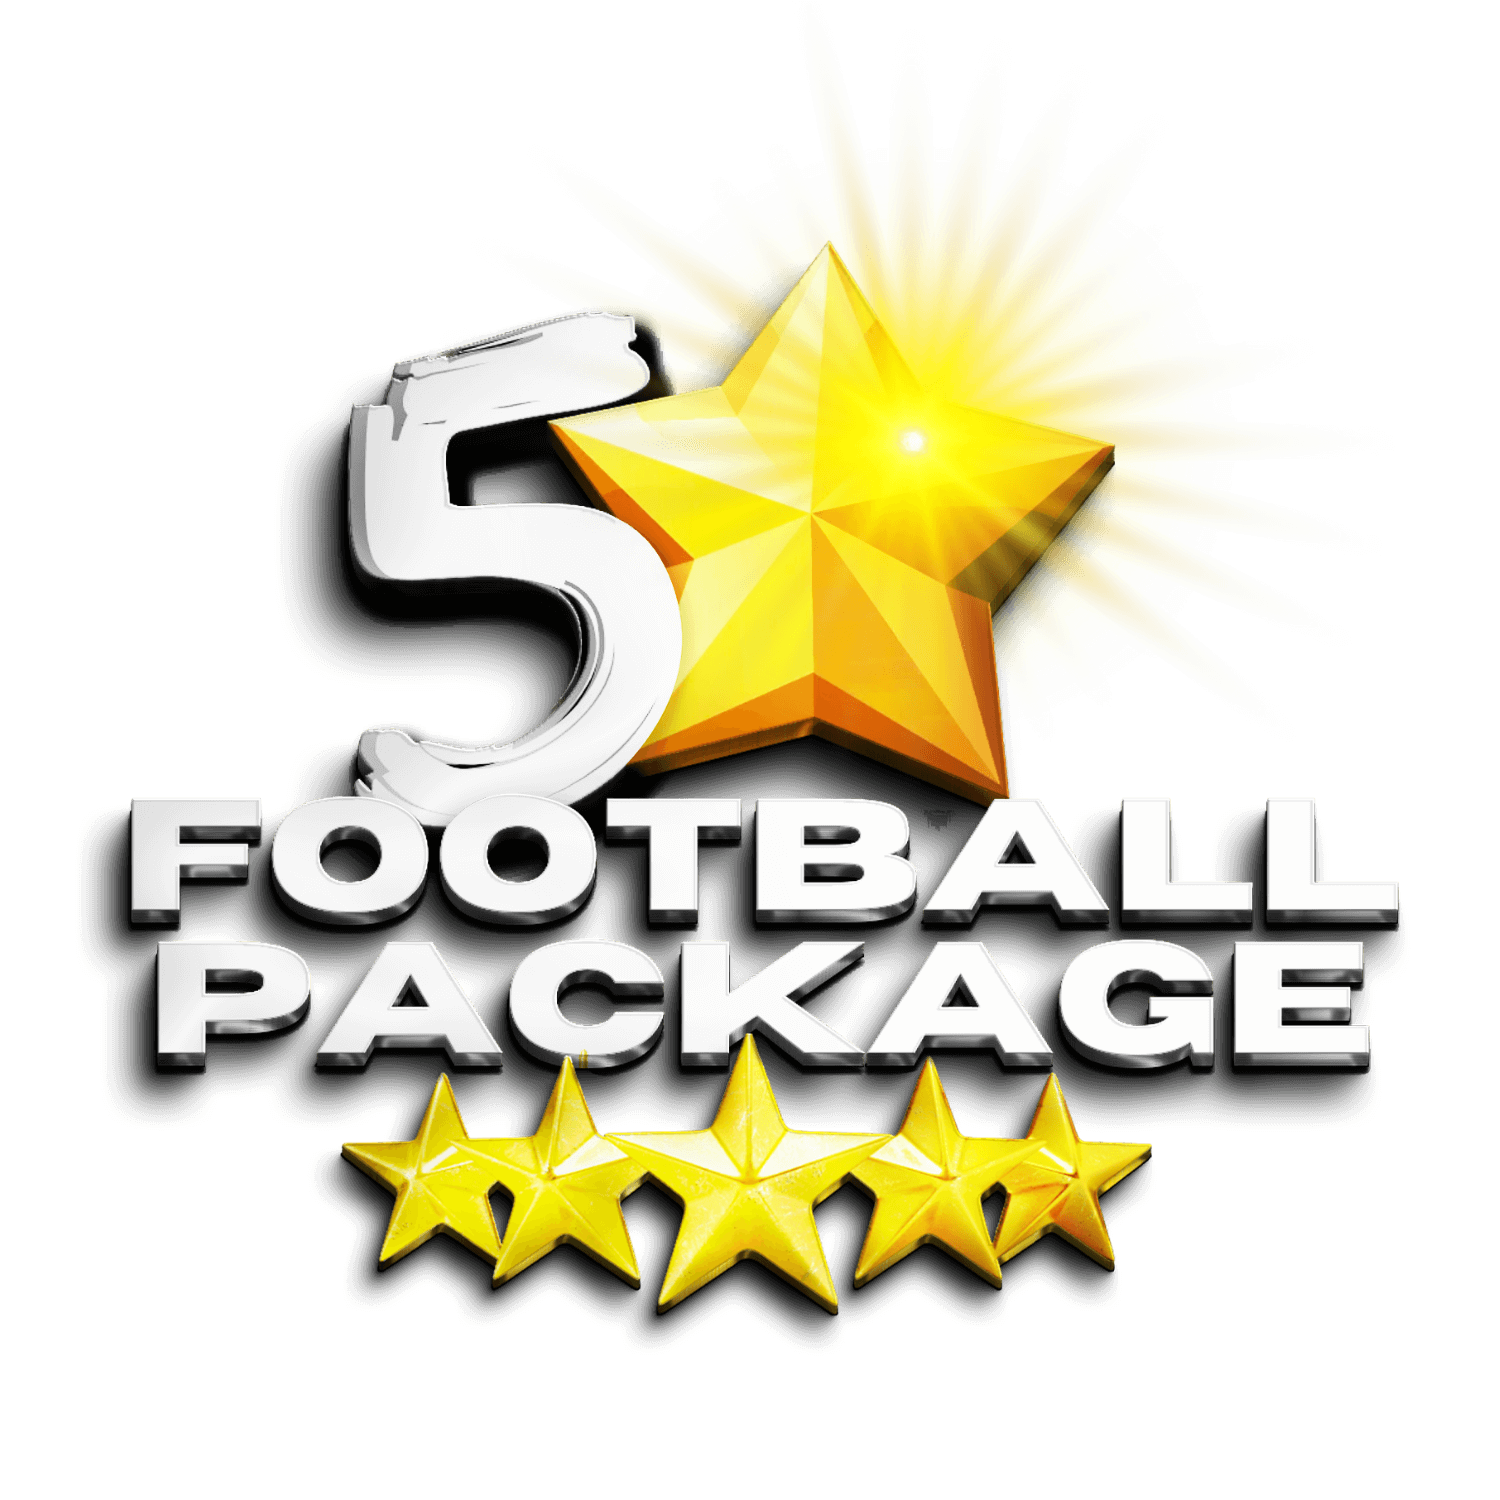 Best Eyeblack For American Football: User Tested! — 5 Star Football Package